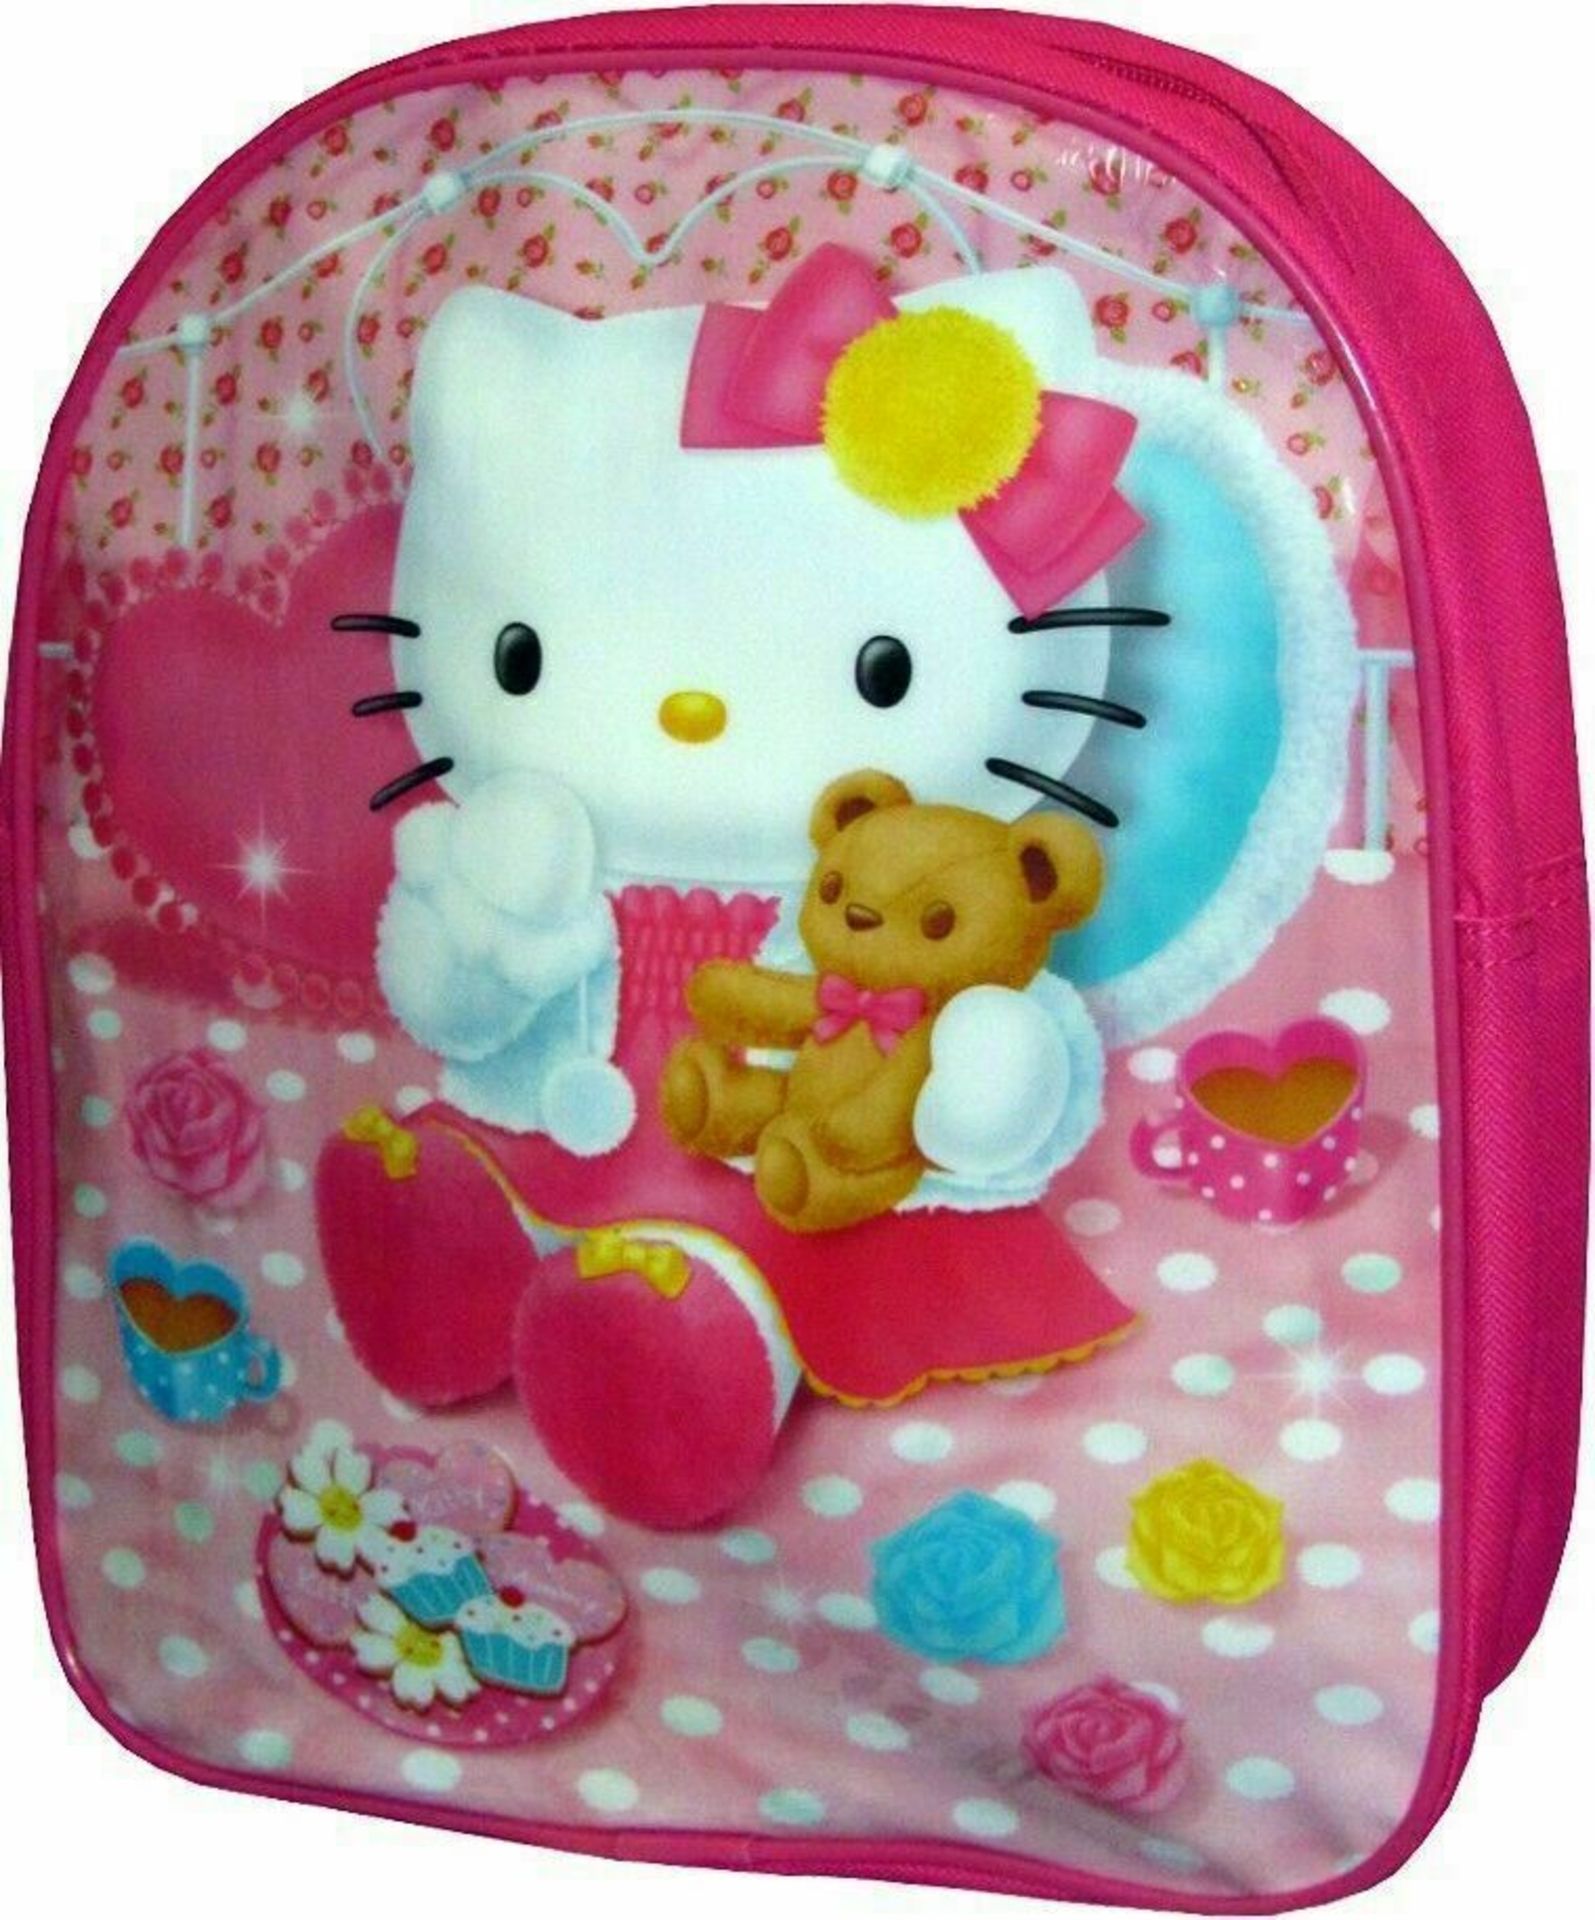 100 x Brand New Kitty Backpacks